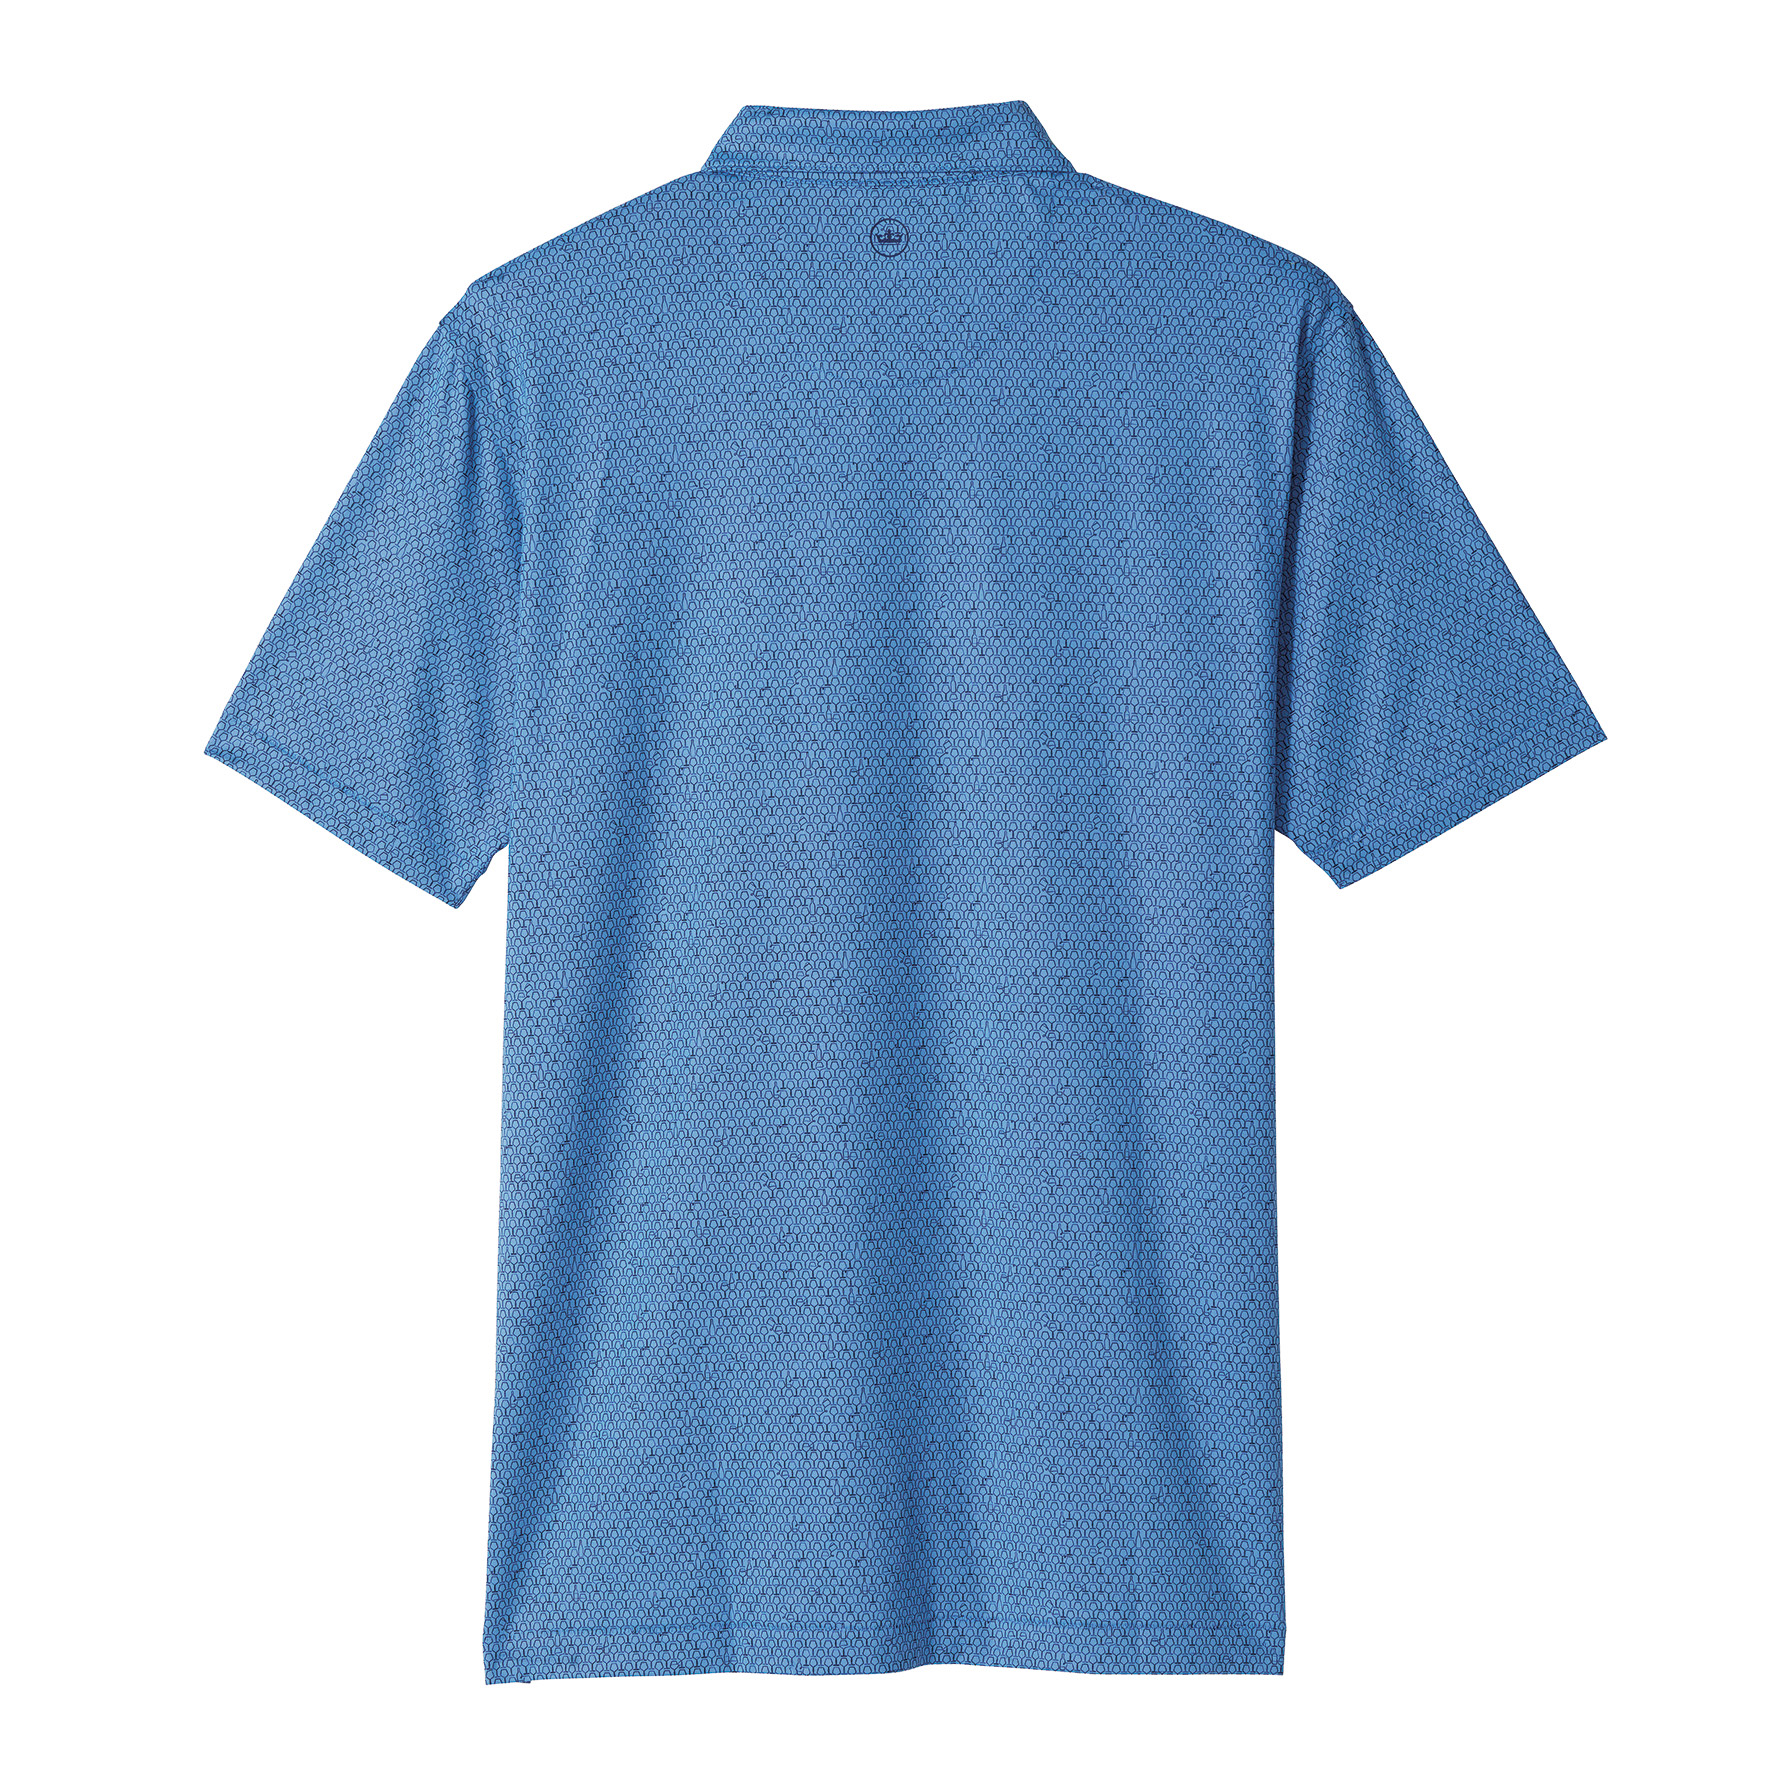 Shop Men's Performance Golf Polo Shirts